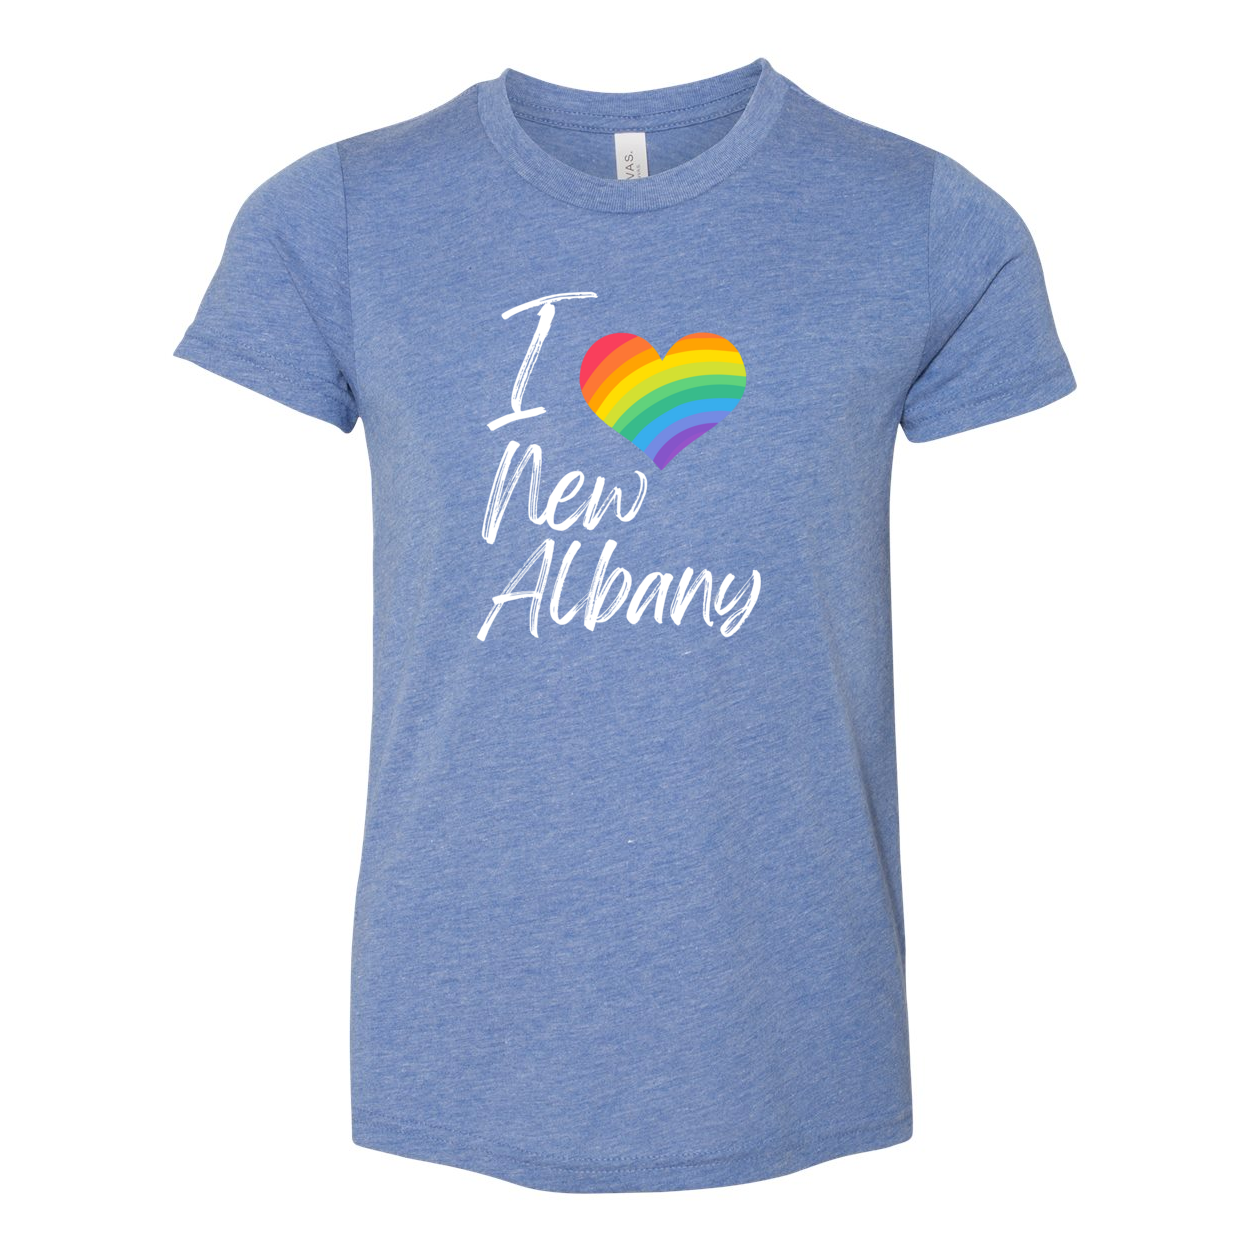 Youth City Rainbow Pride Heart Super Soft Short Sleeve Graphic Tee - New Albany